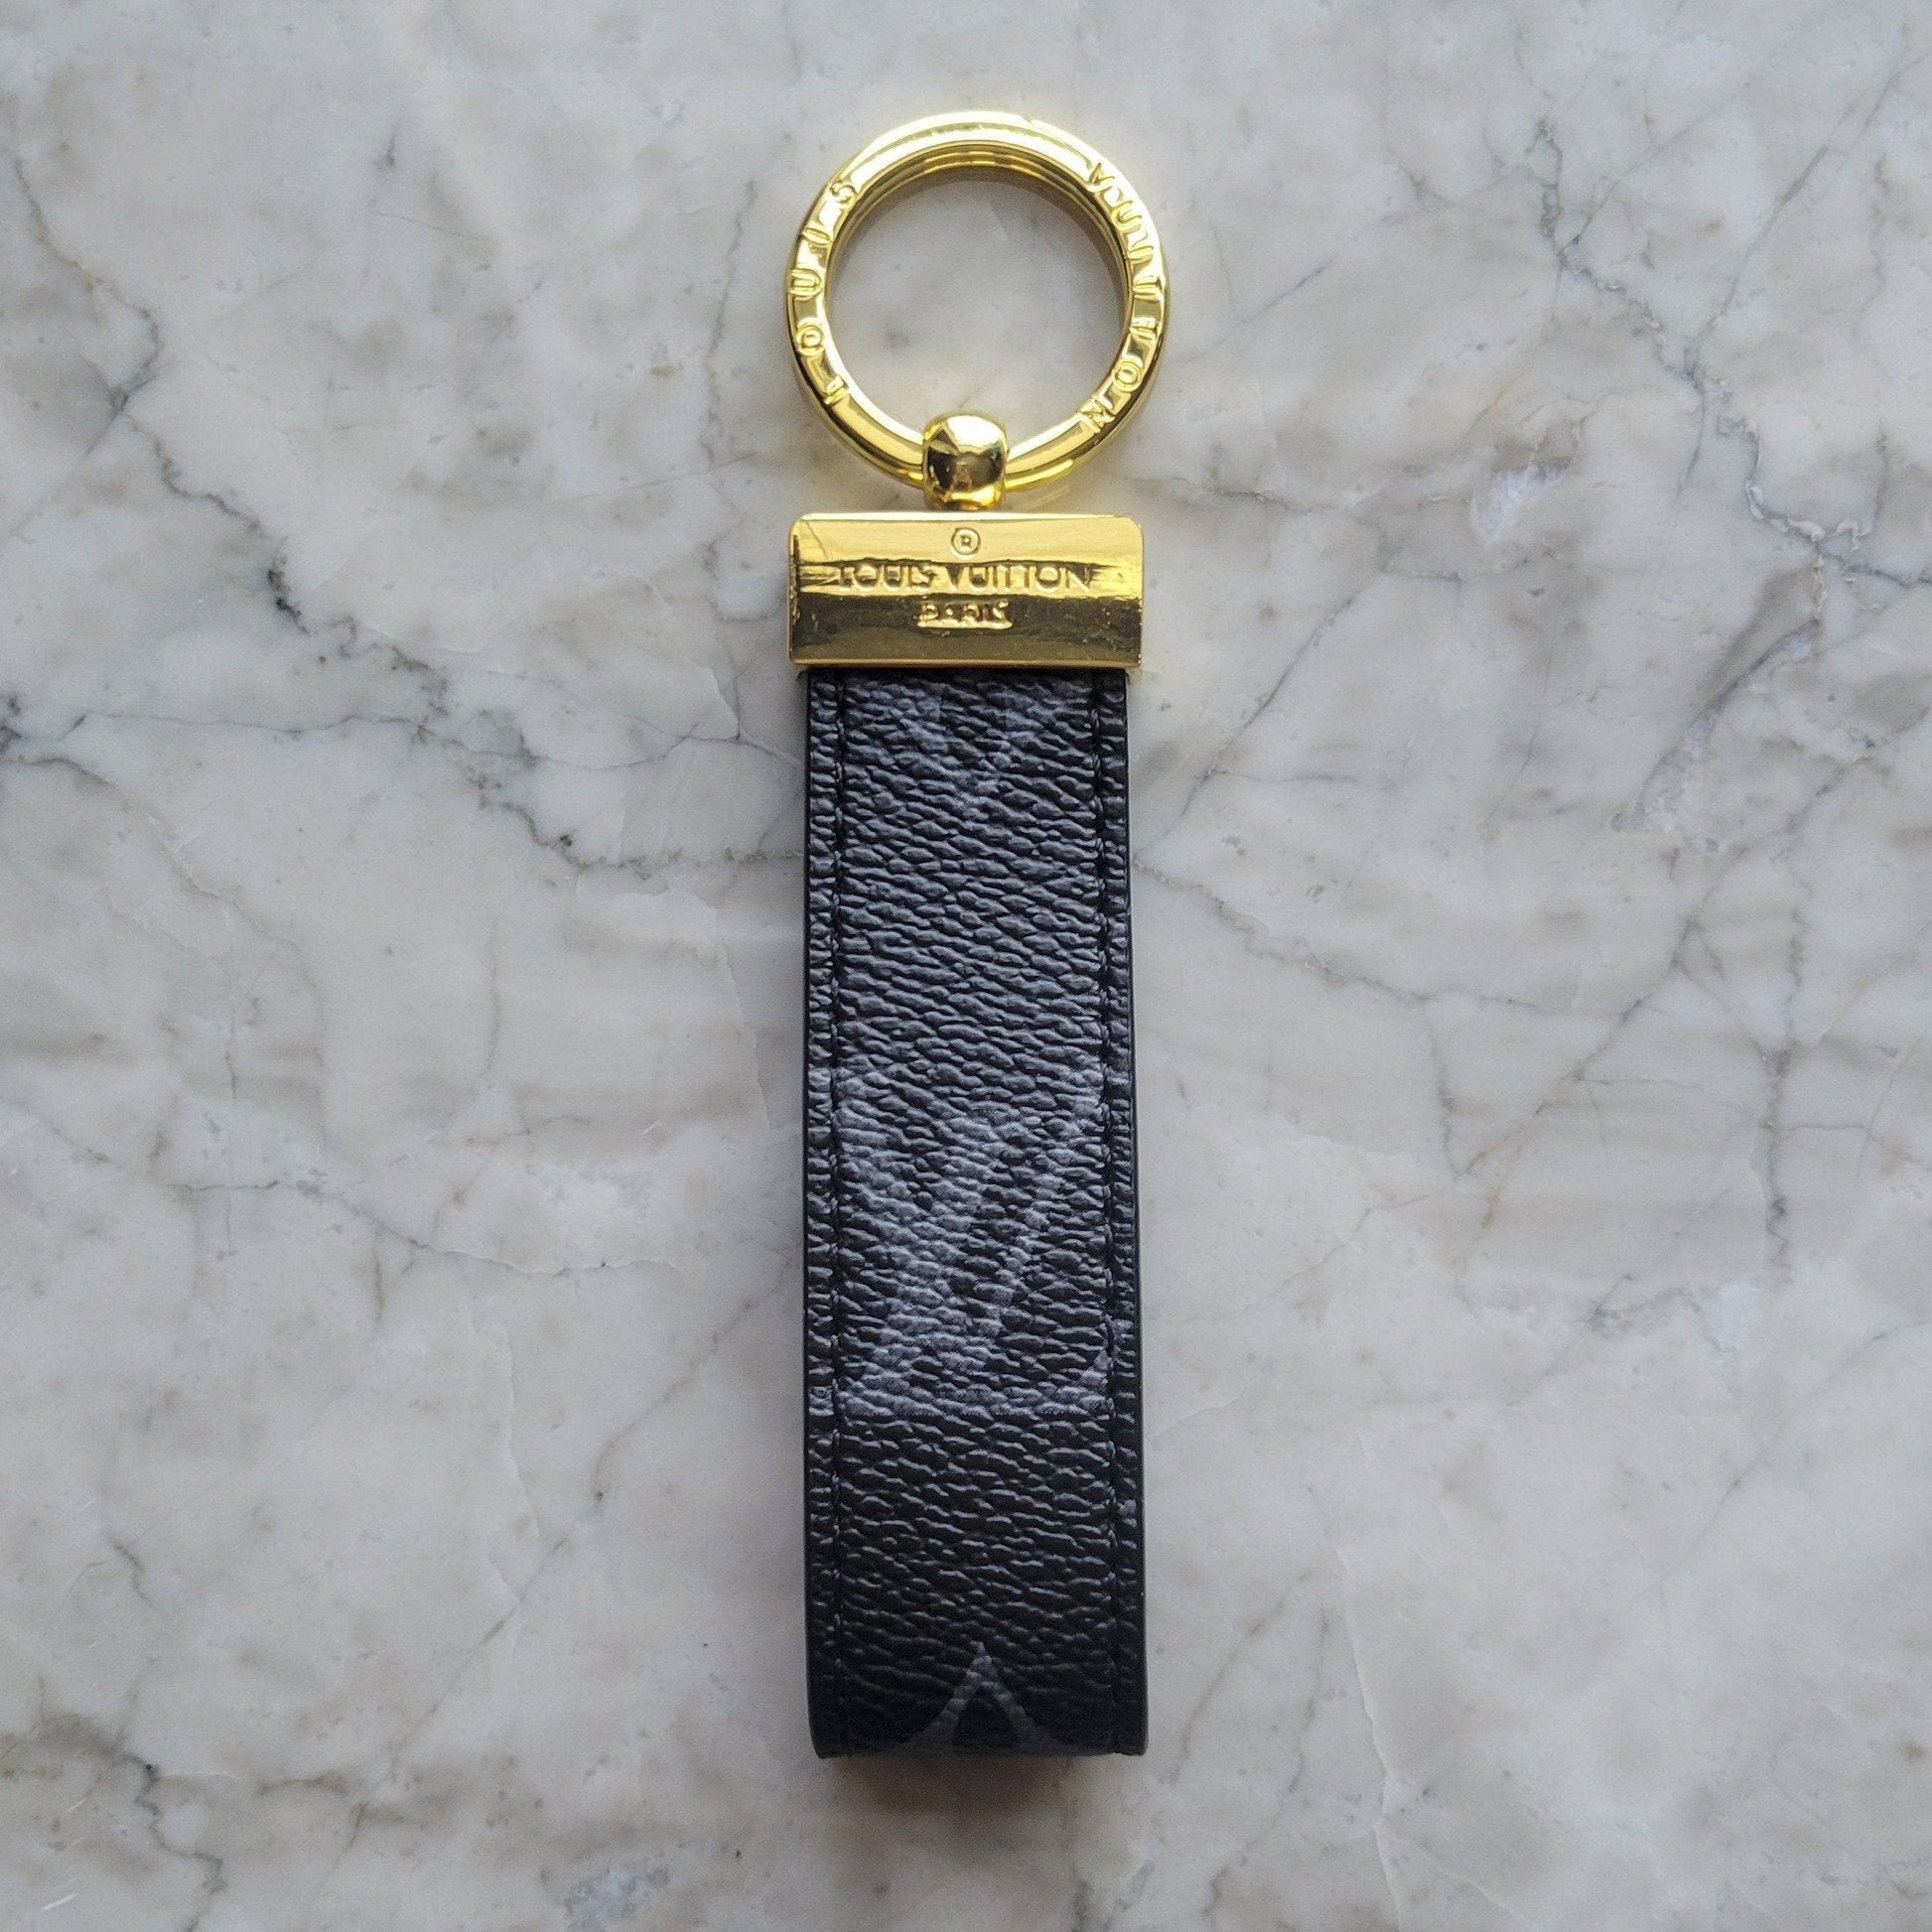 Louis Vuitton Monogram Keychain on SALE